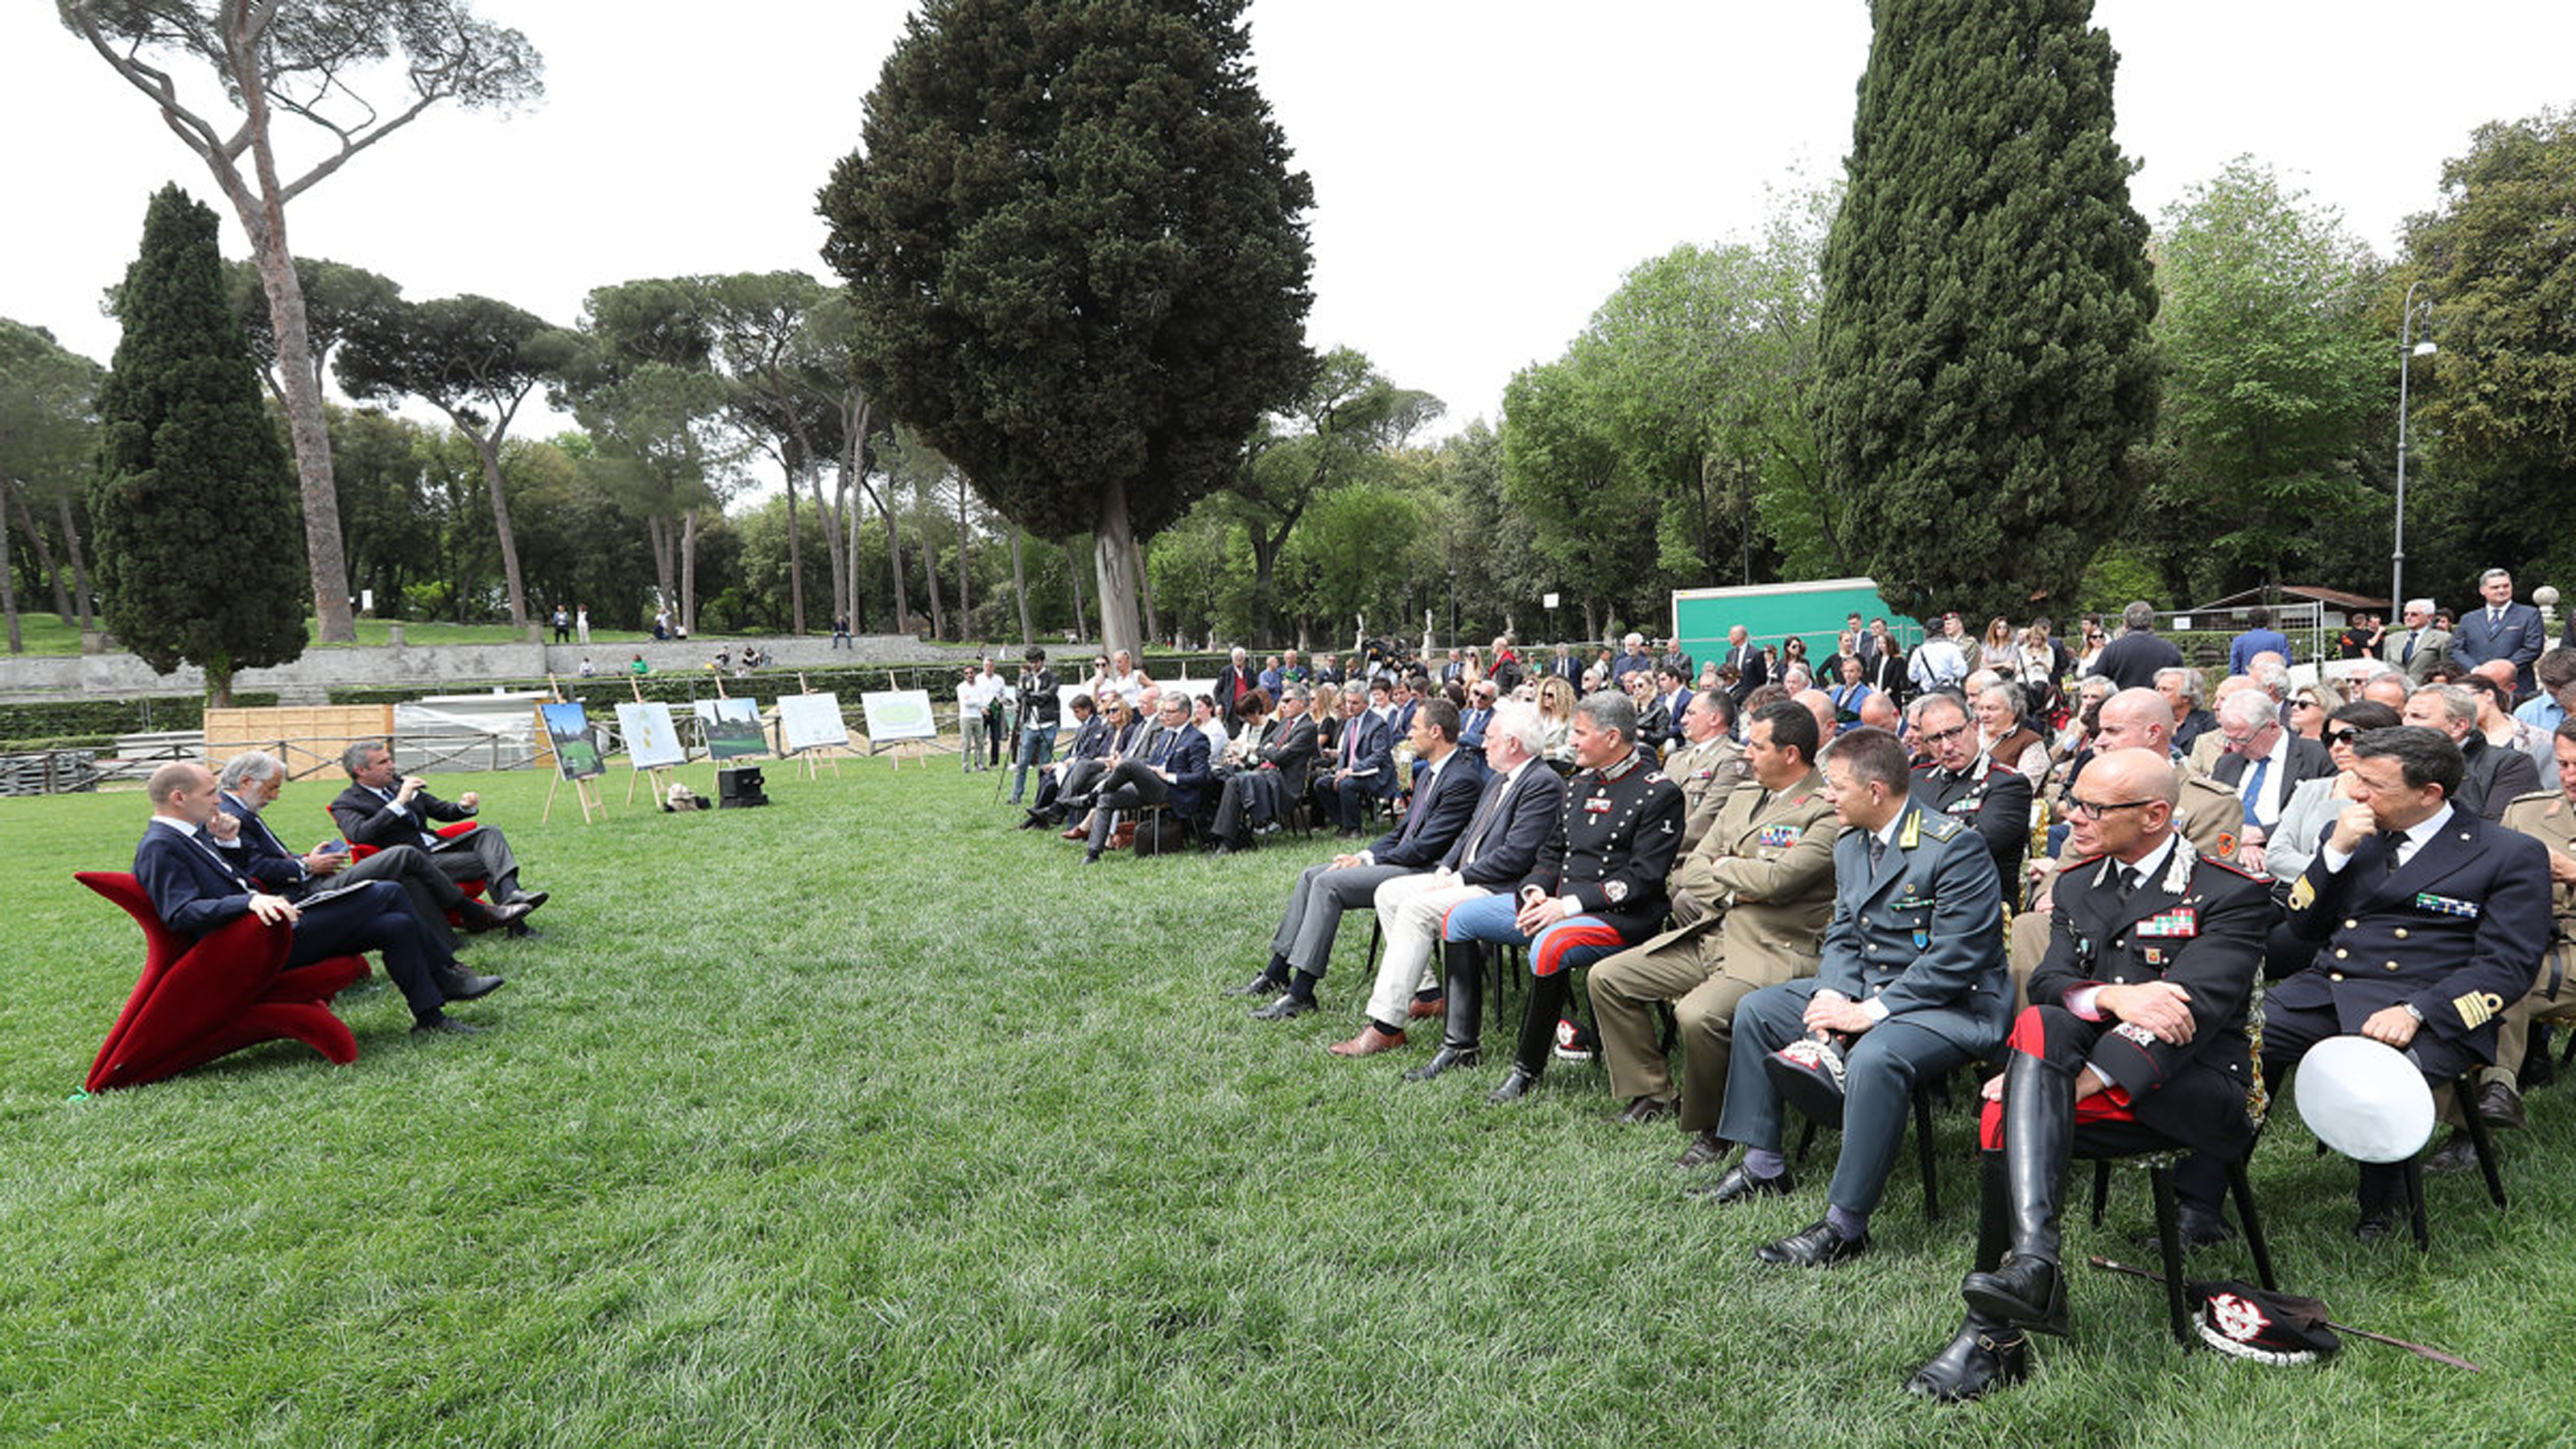 images/news_piazza_siena/055-Presentazione-Piazza-di-Siena-Pagliaricci-GMT.jpg